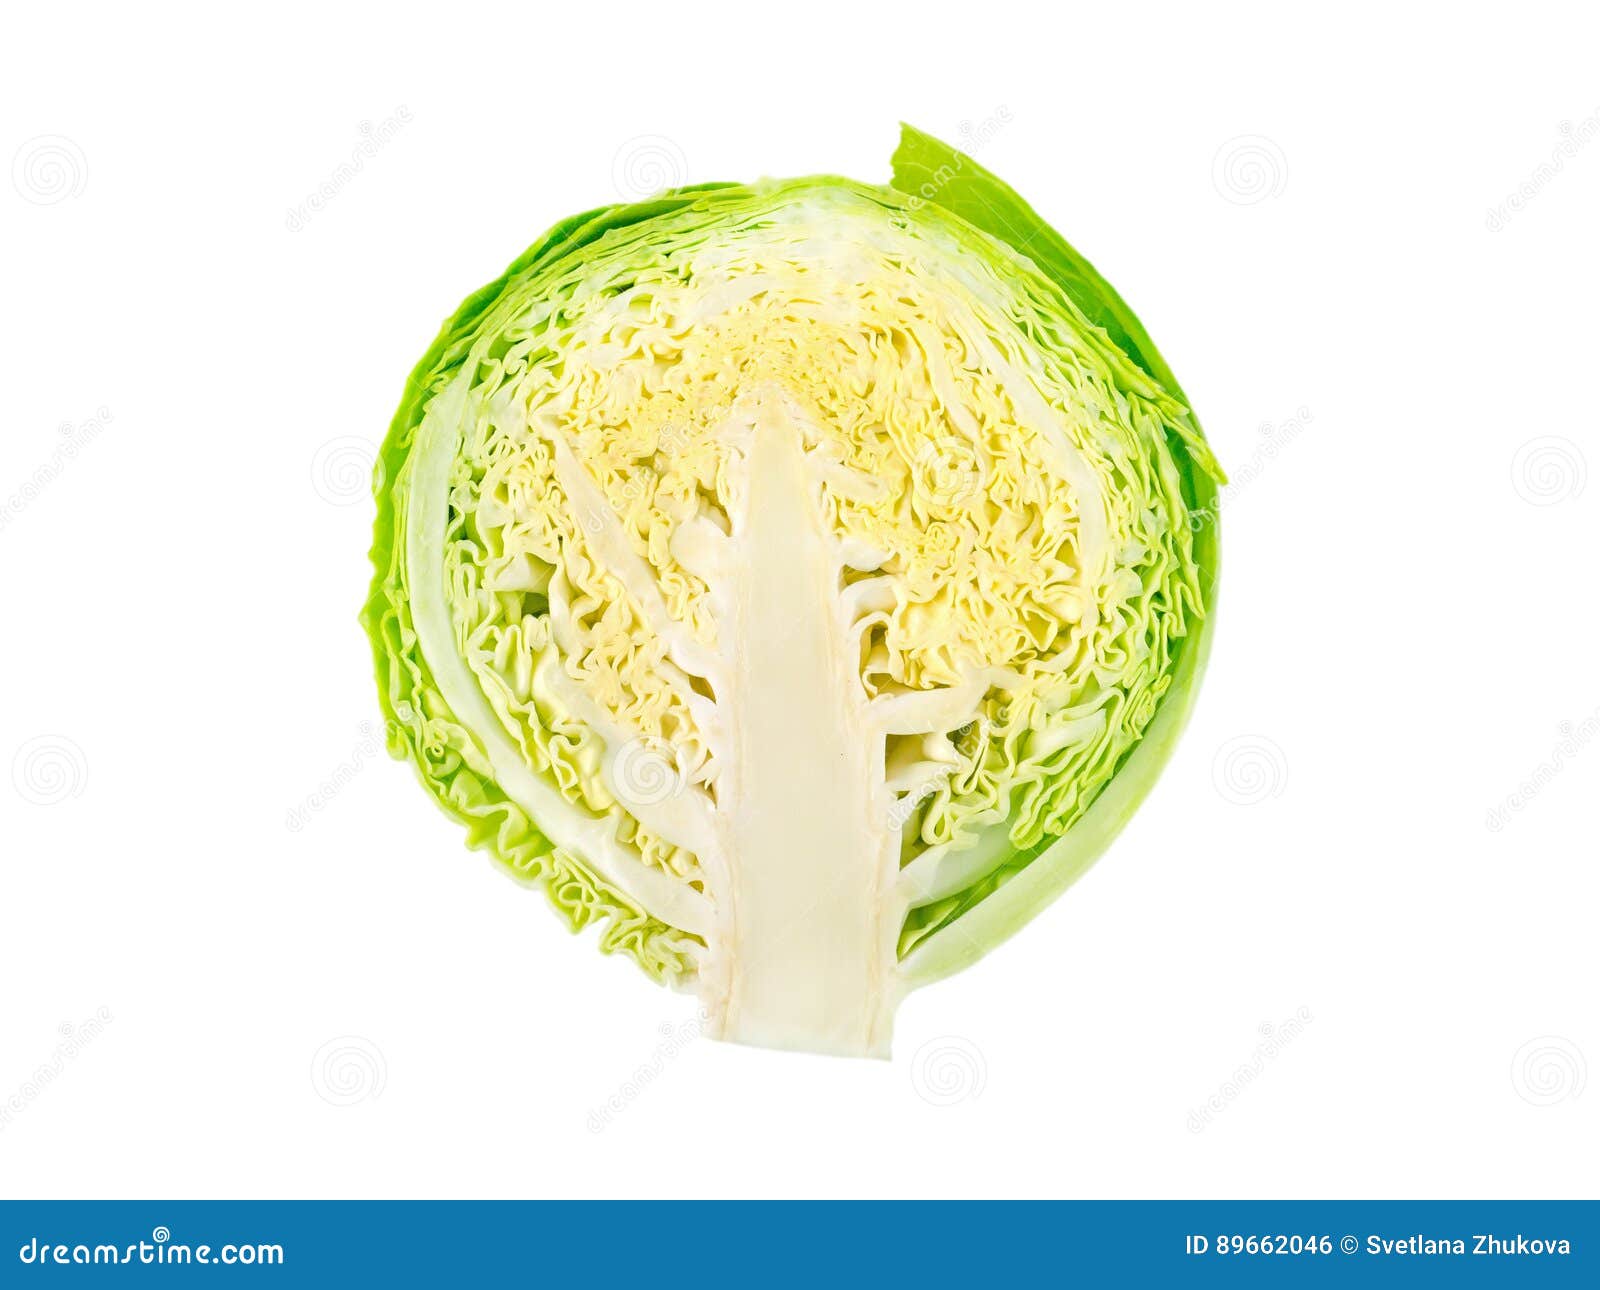 cabbage head  on white